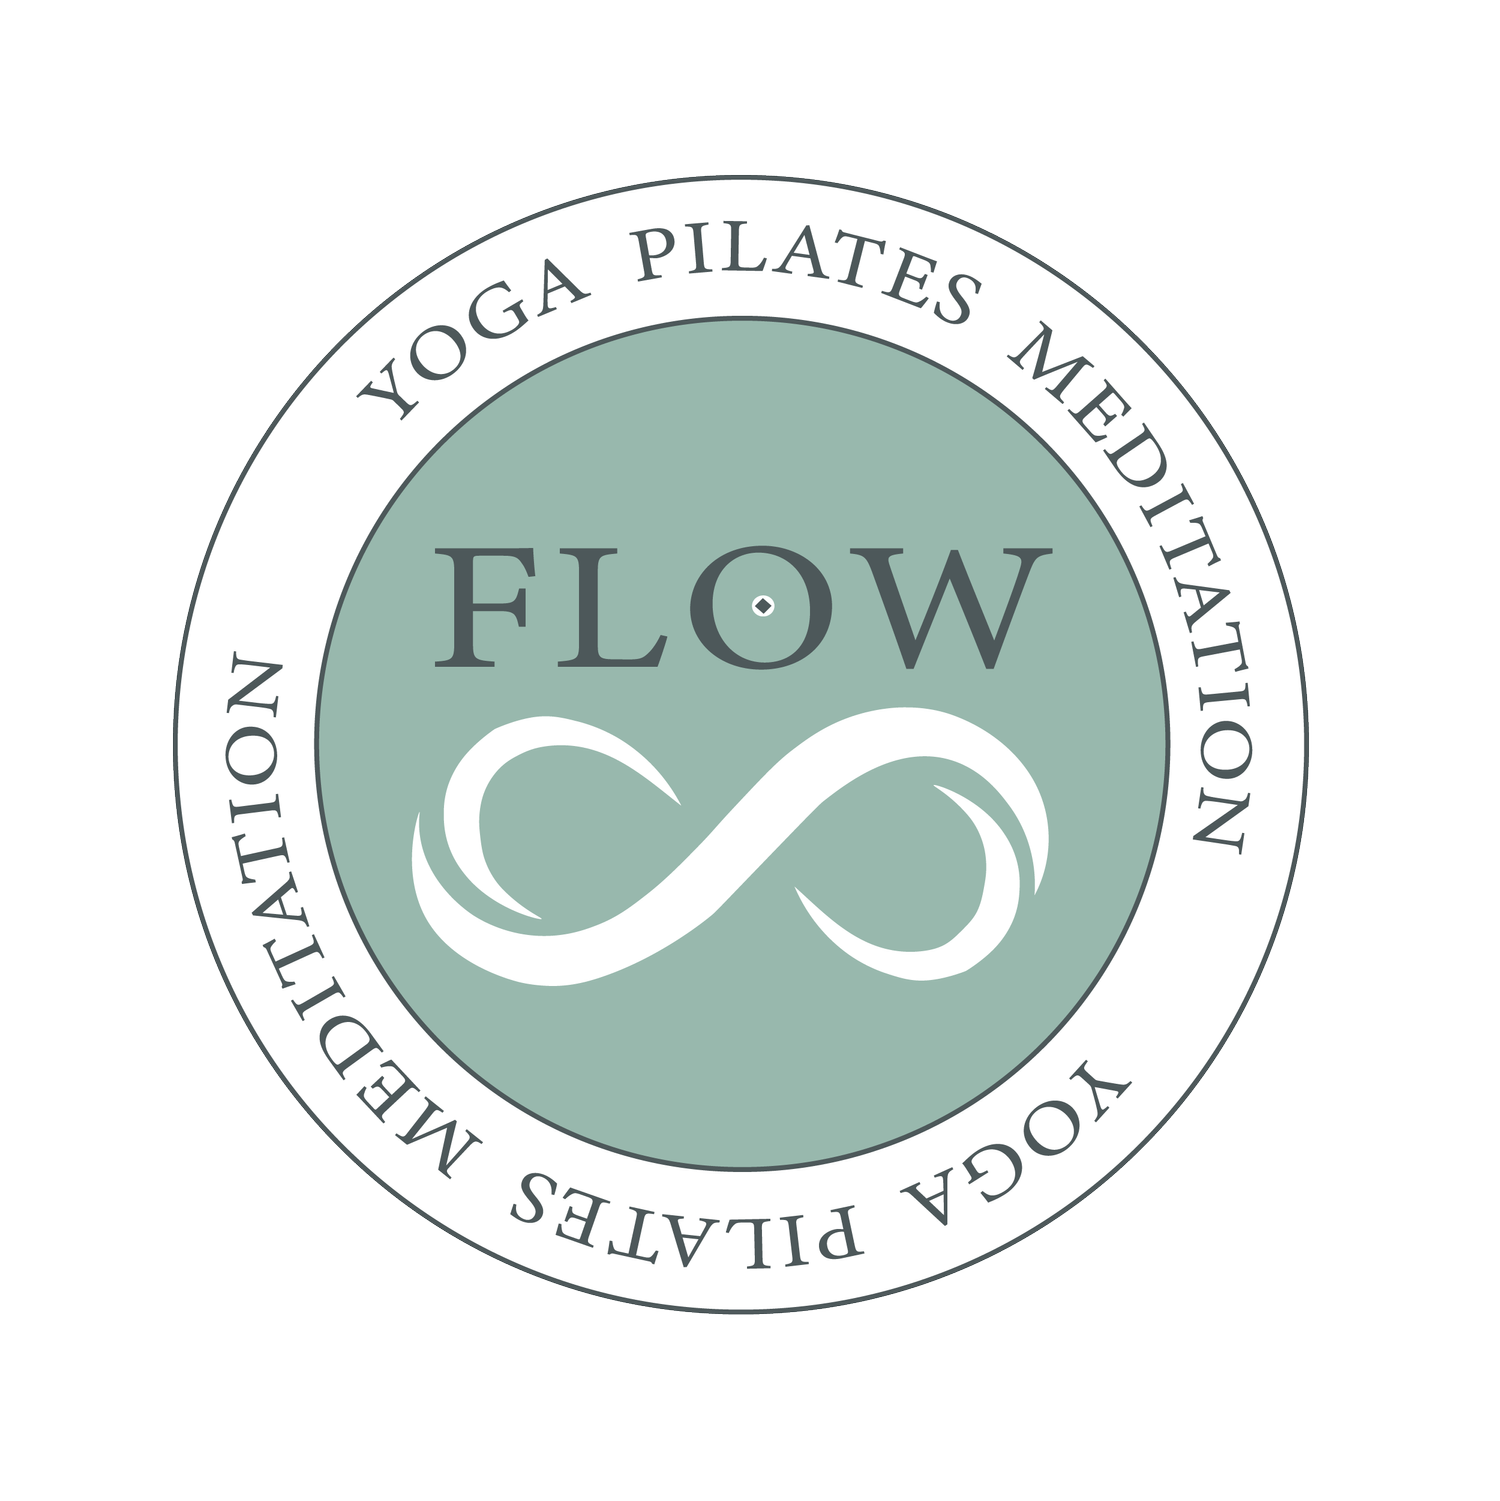 Flow Yoga Studio